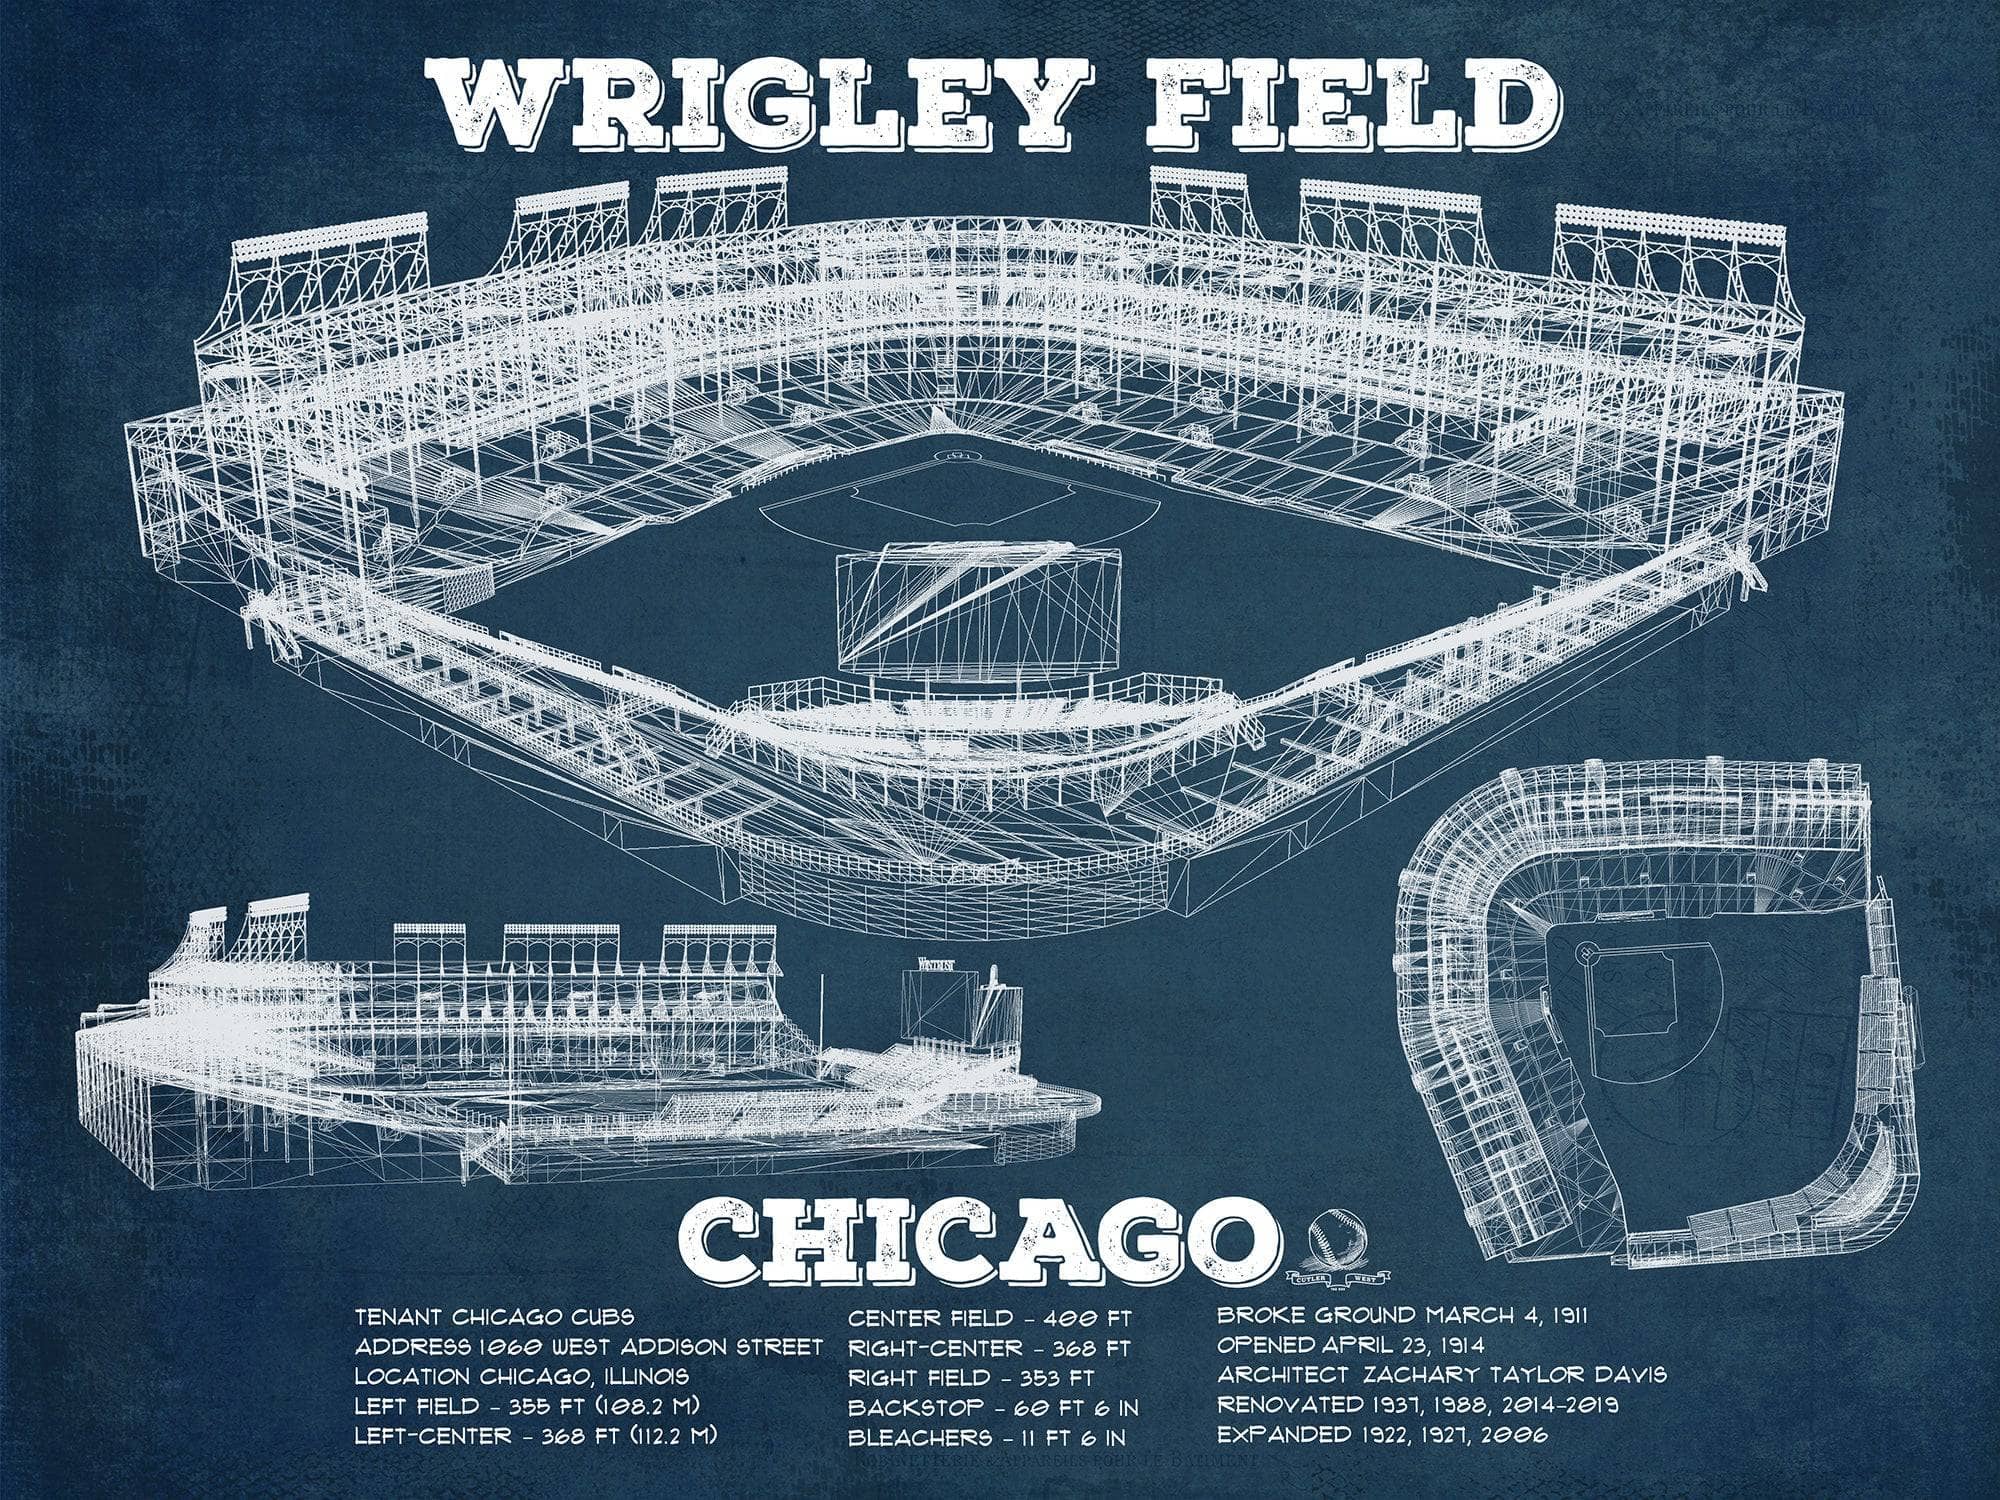 Cutler West Baseball Collection 14" x 11" / Unframed Vintage Wrigley Field Print - Chicago Cubs Baseball Print 723850098-TOP-14"-x-11"5341